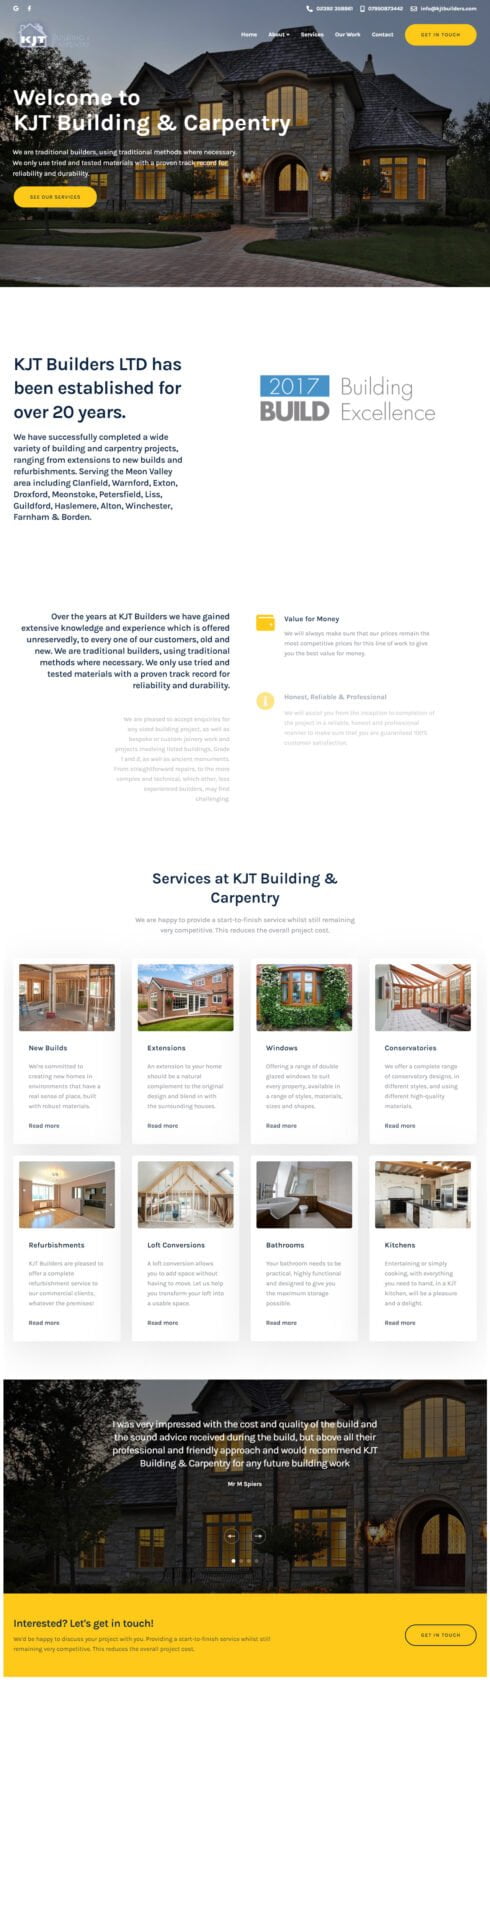 KJT Builders Ltd